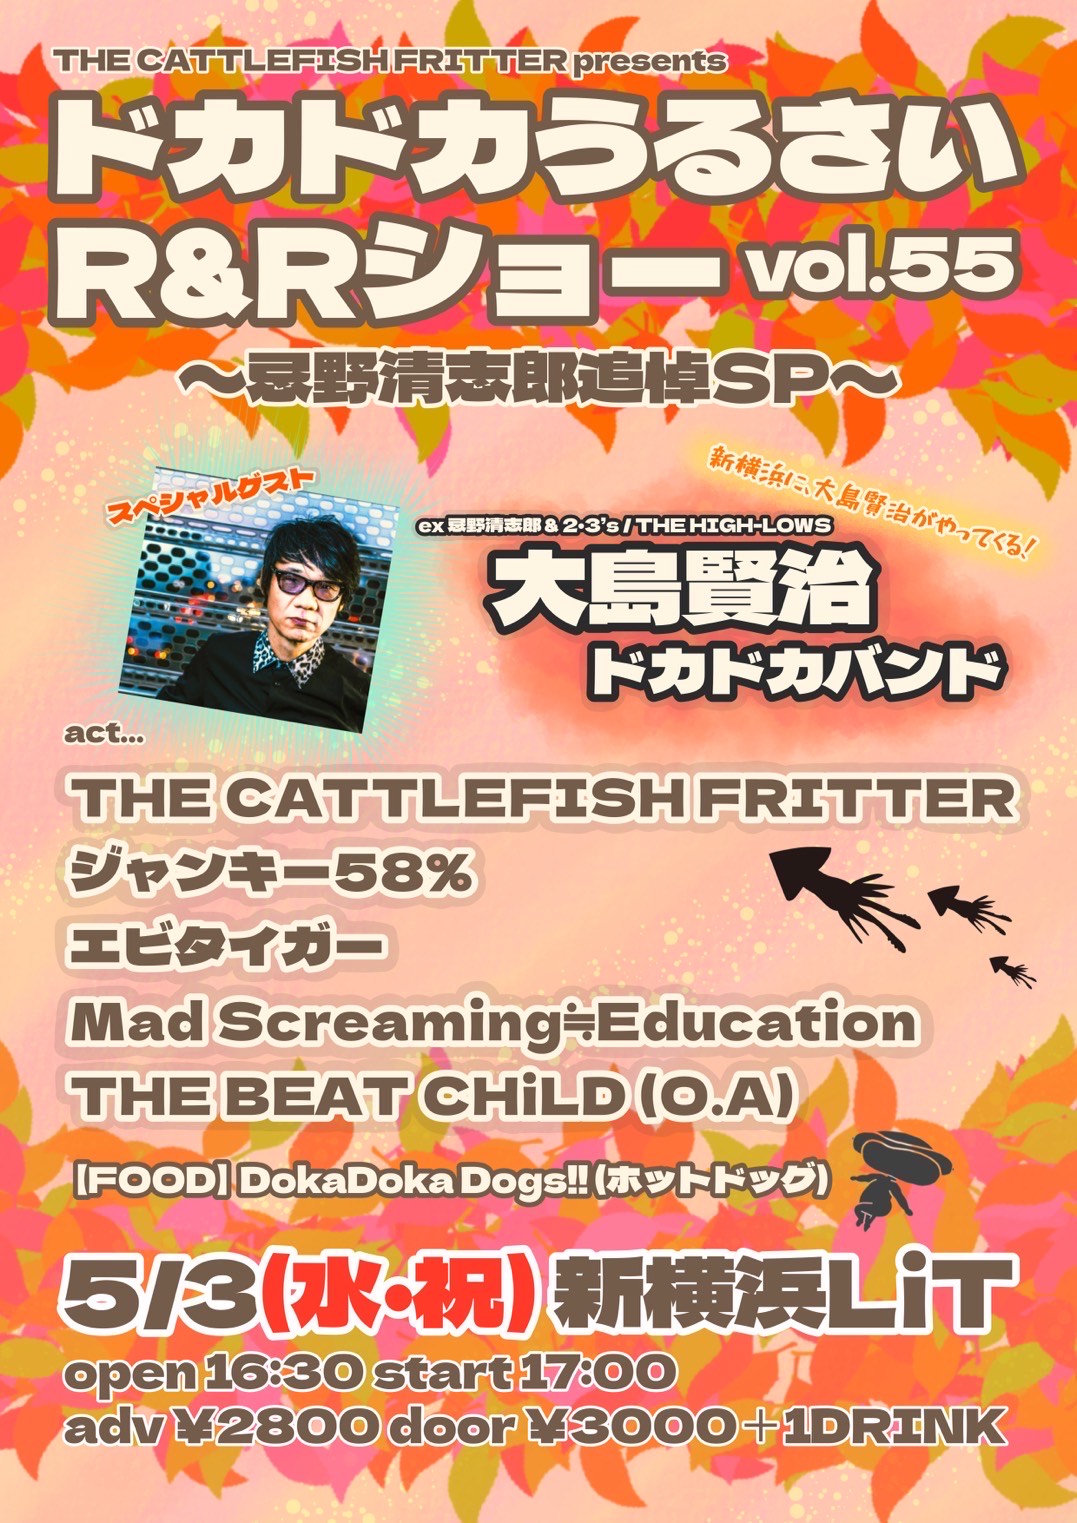 2023/5/3 [THE CATTLEFISH FRITTER presents 「ドカドカうるさいR&Rショー vol.55 ～忌野清志郎追悼SP～」]